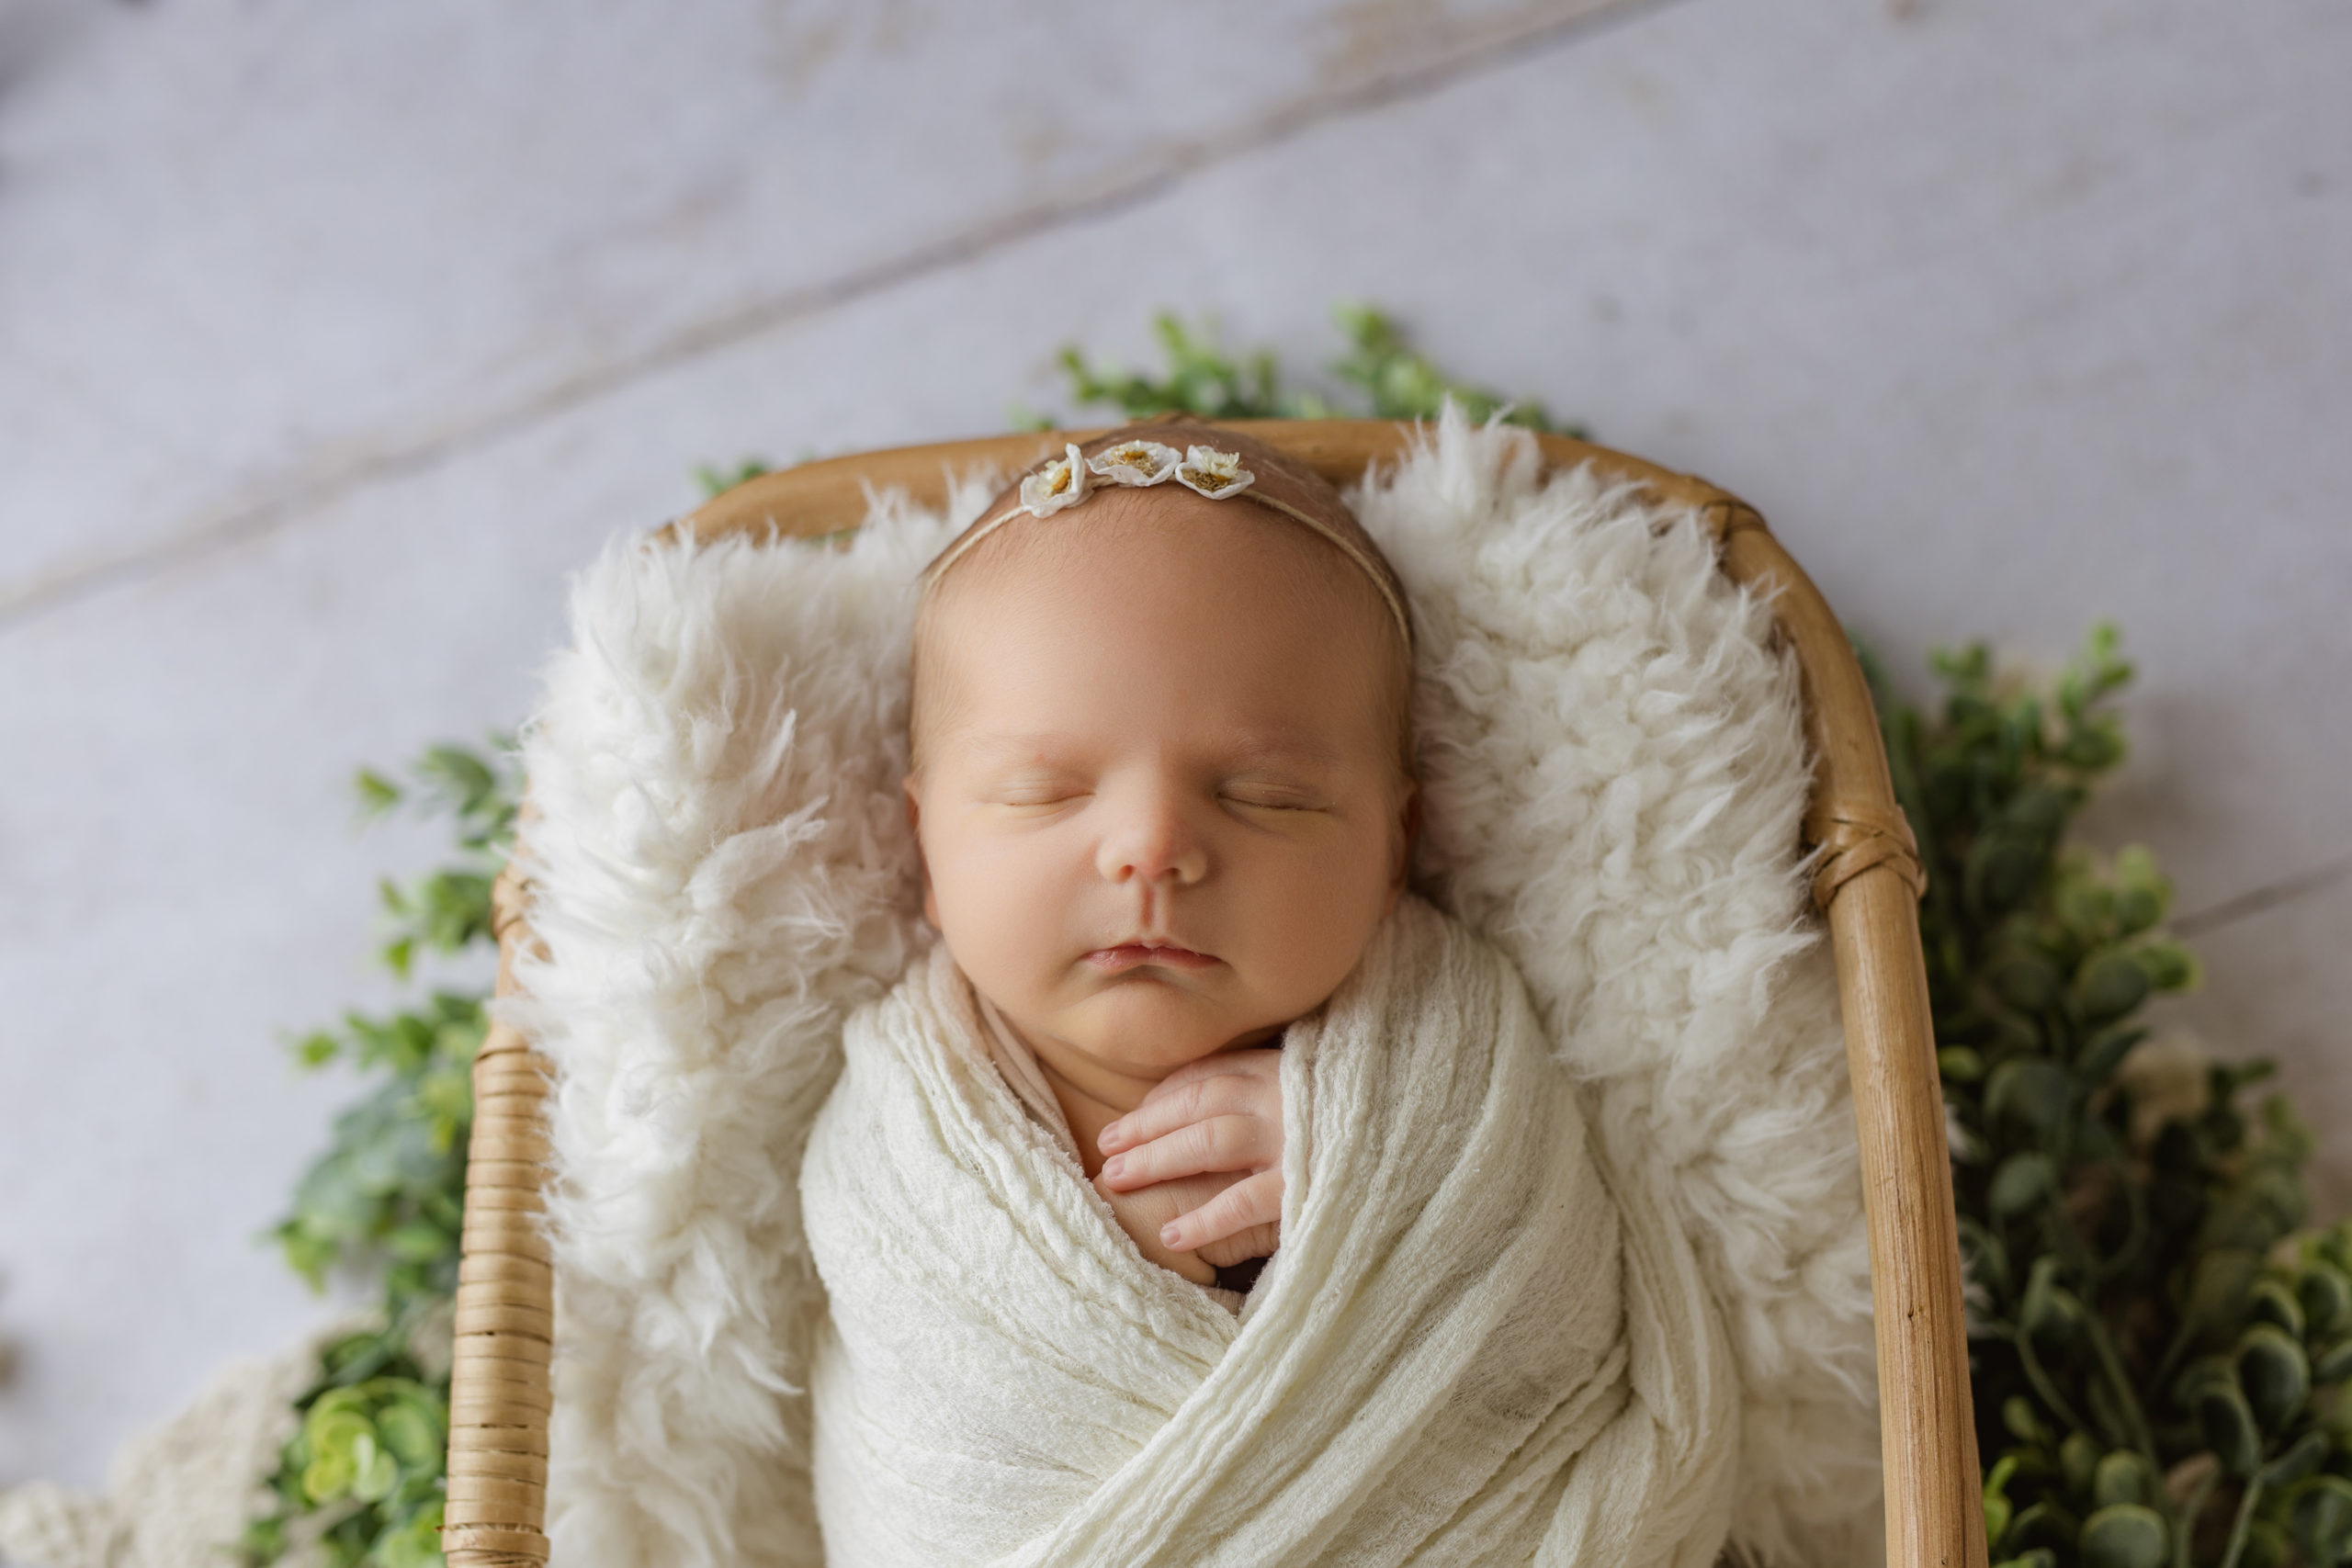 Newborn baby girl in a white wrap for newborn photos